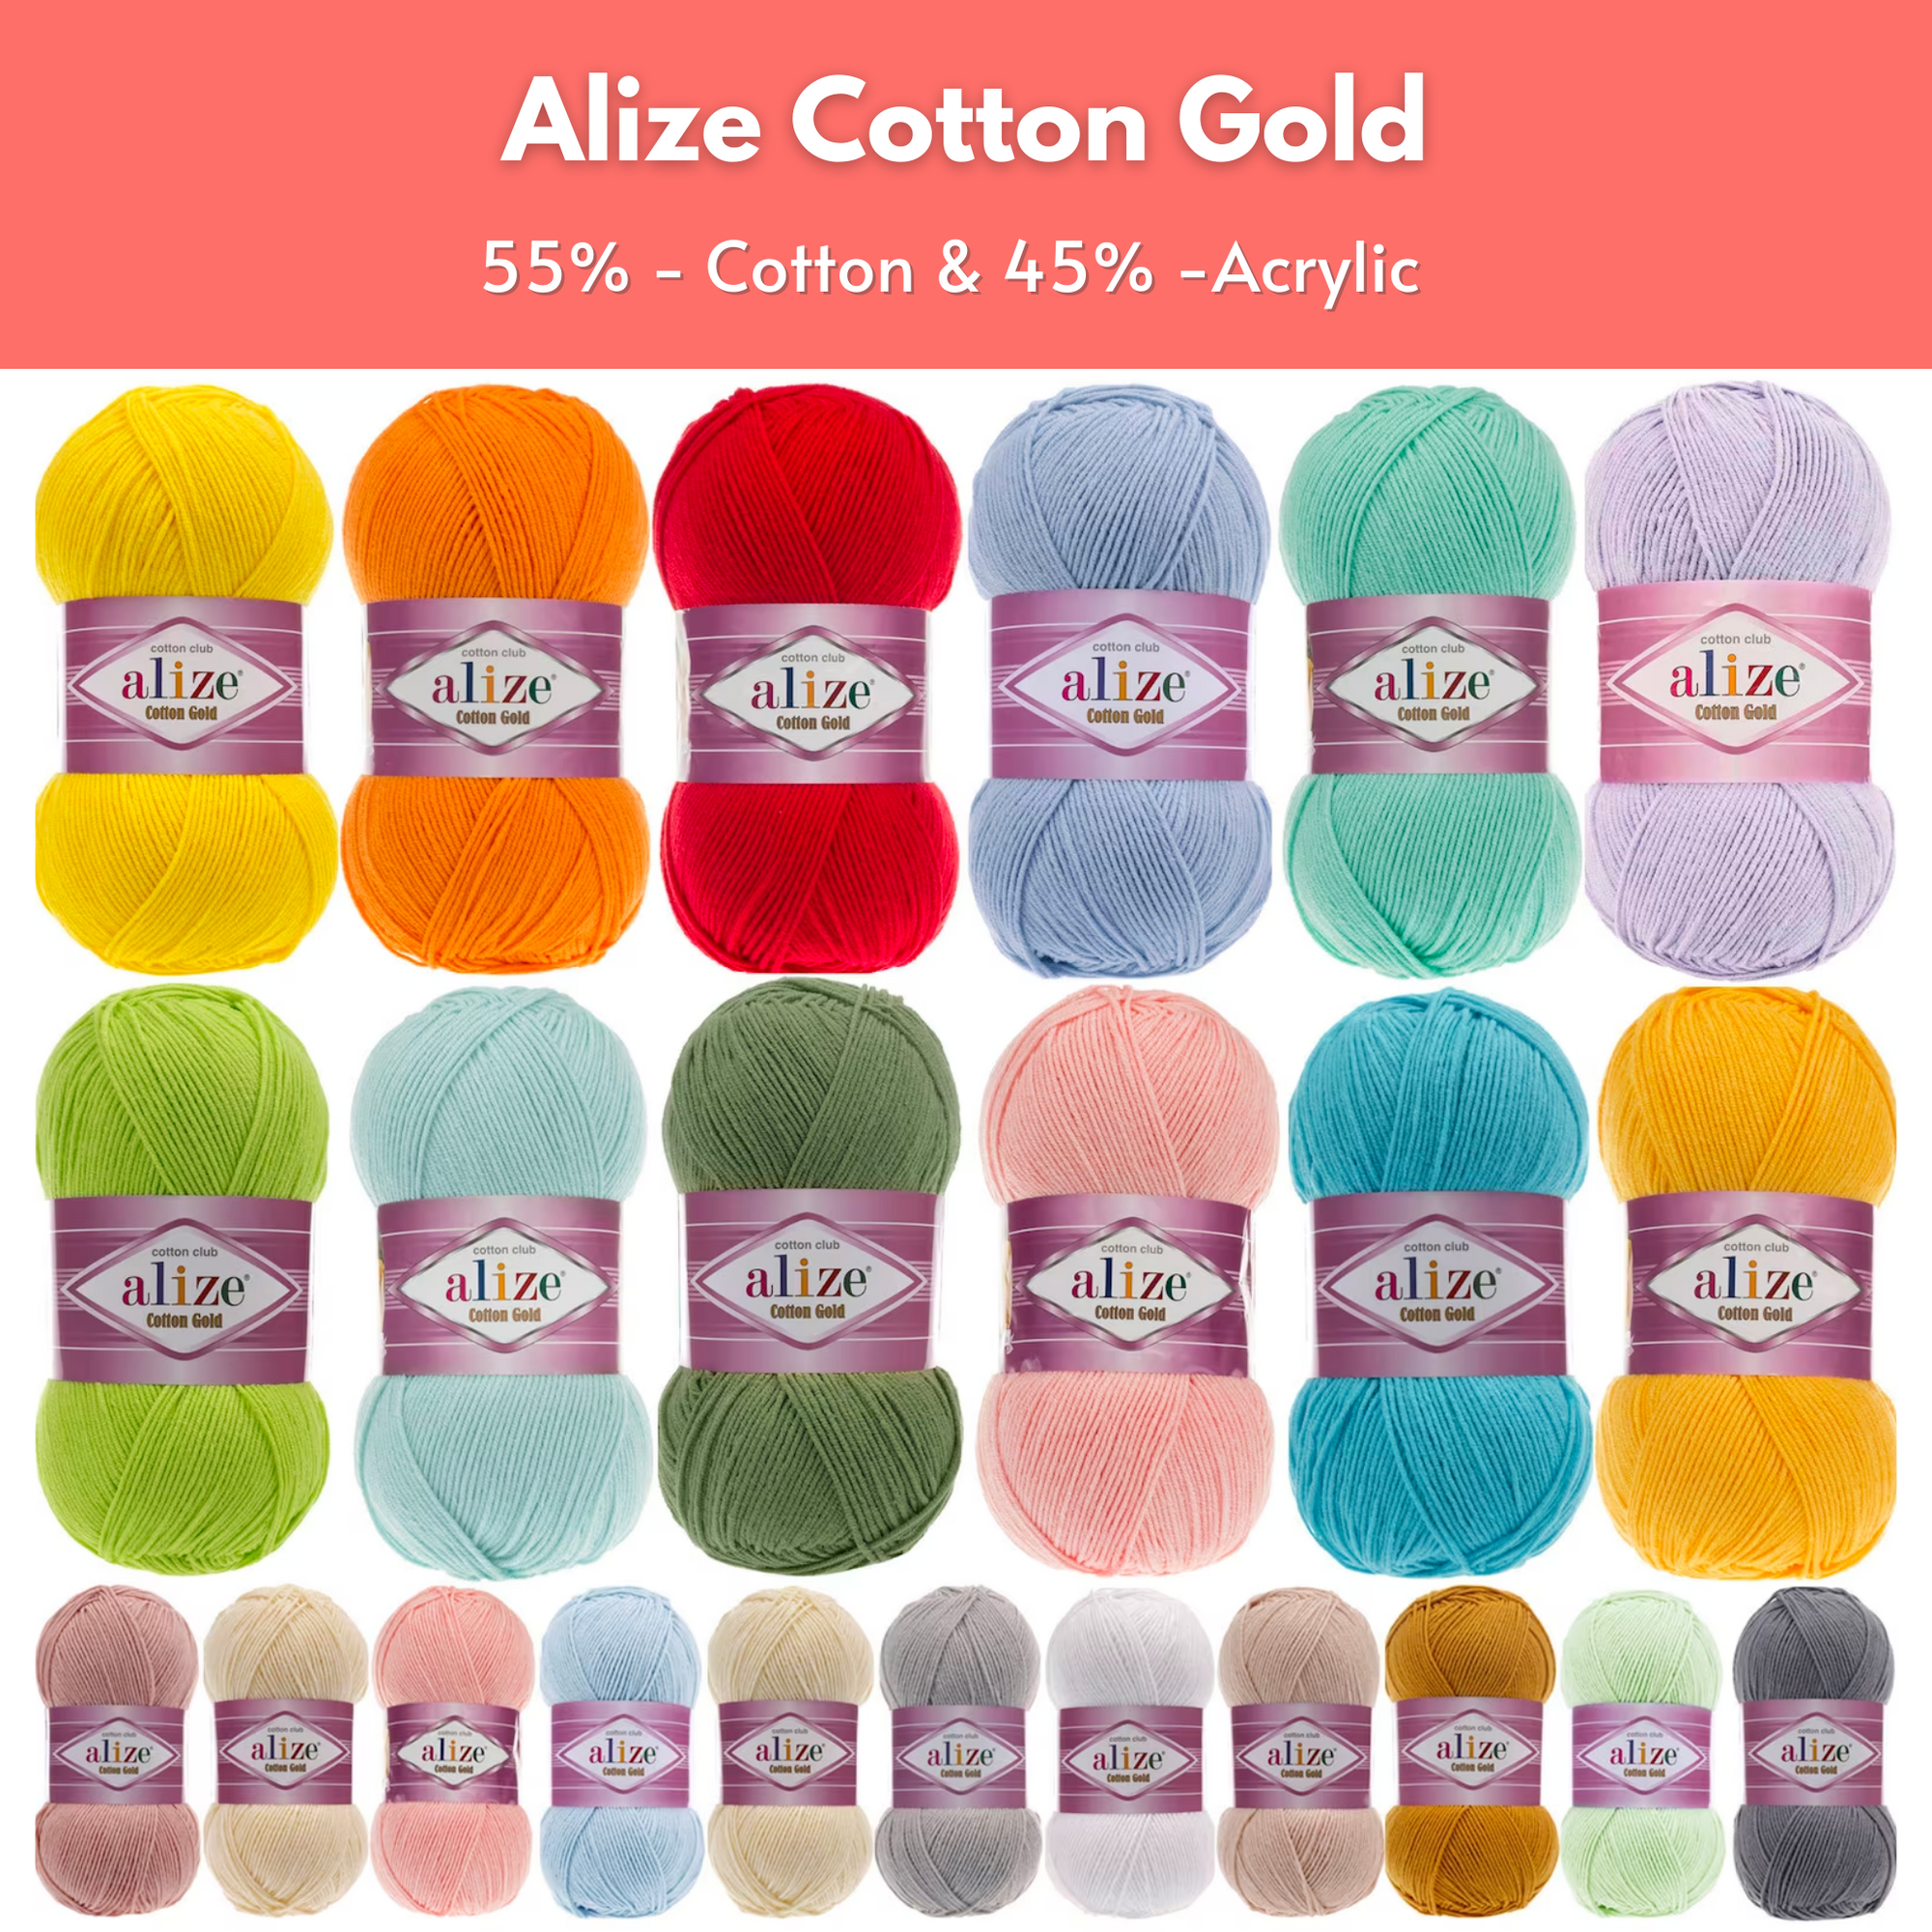 Alize Cotton Gold Knitting Yarn, Midnight Blue - 279